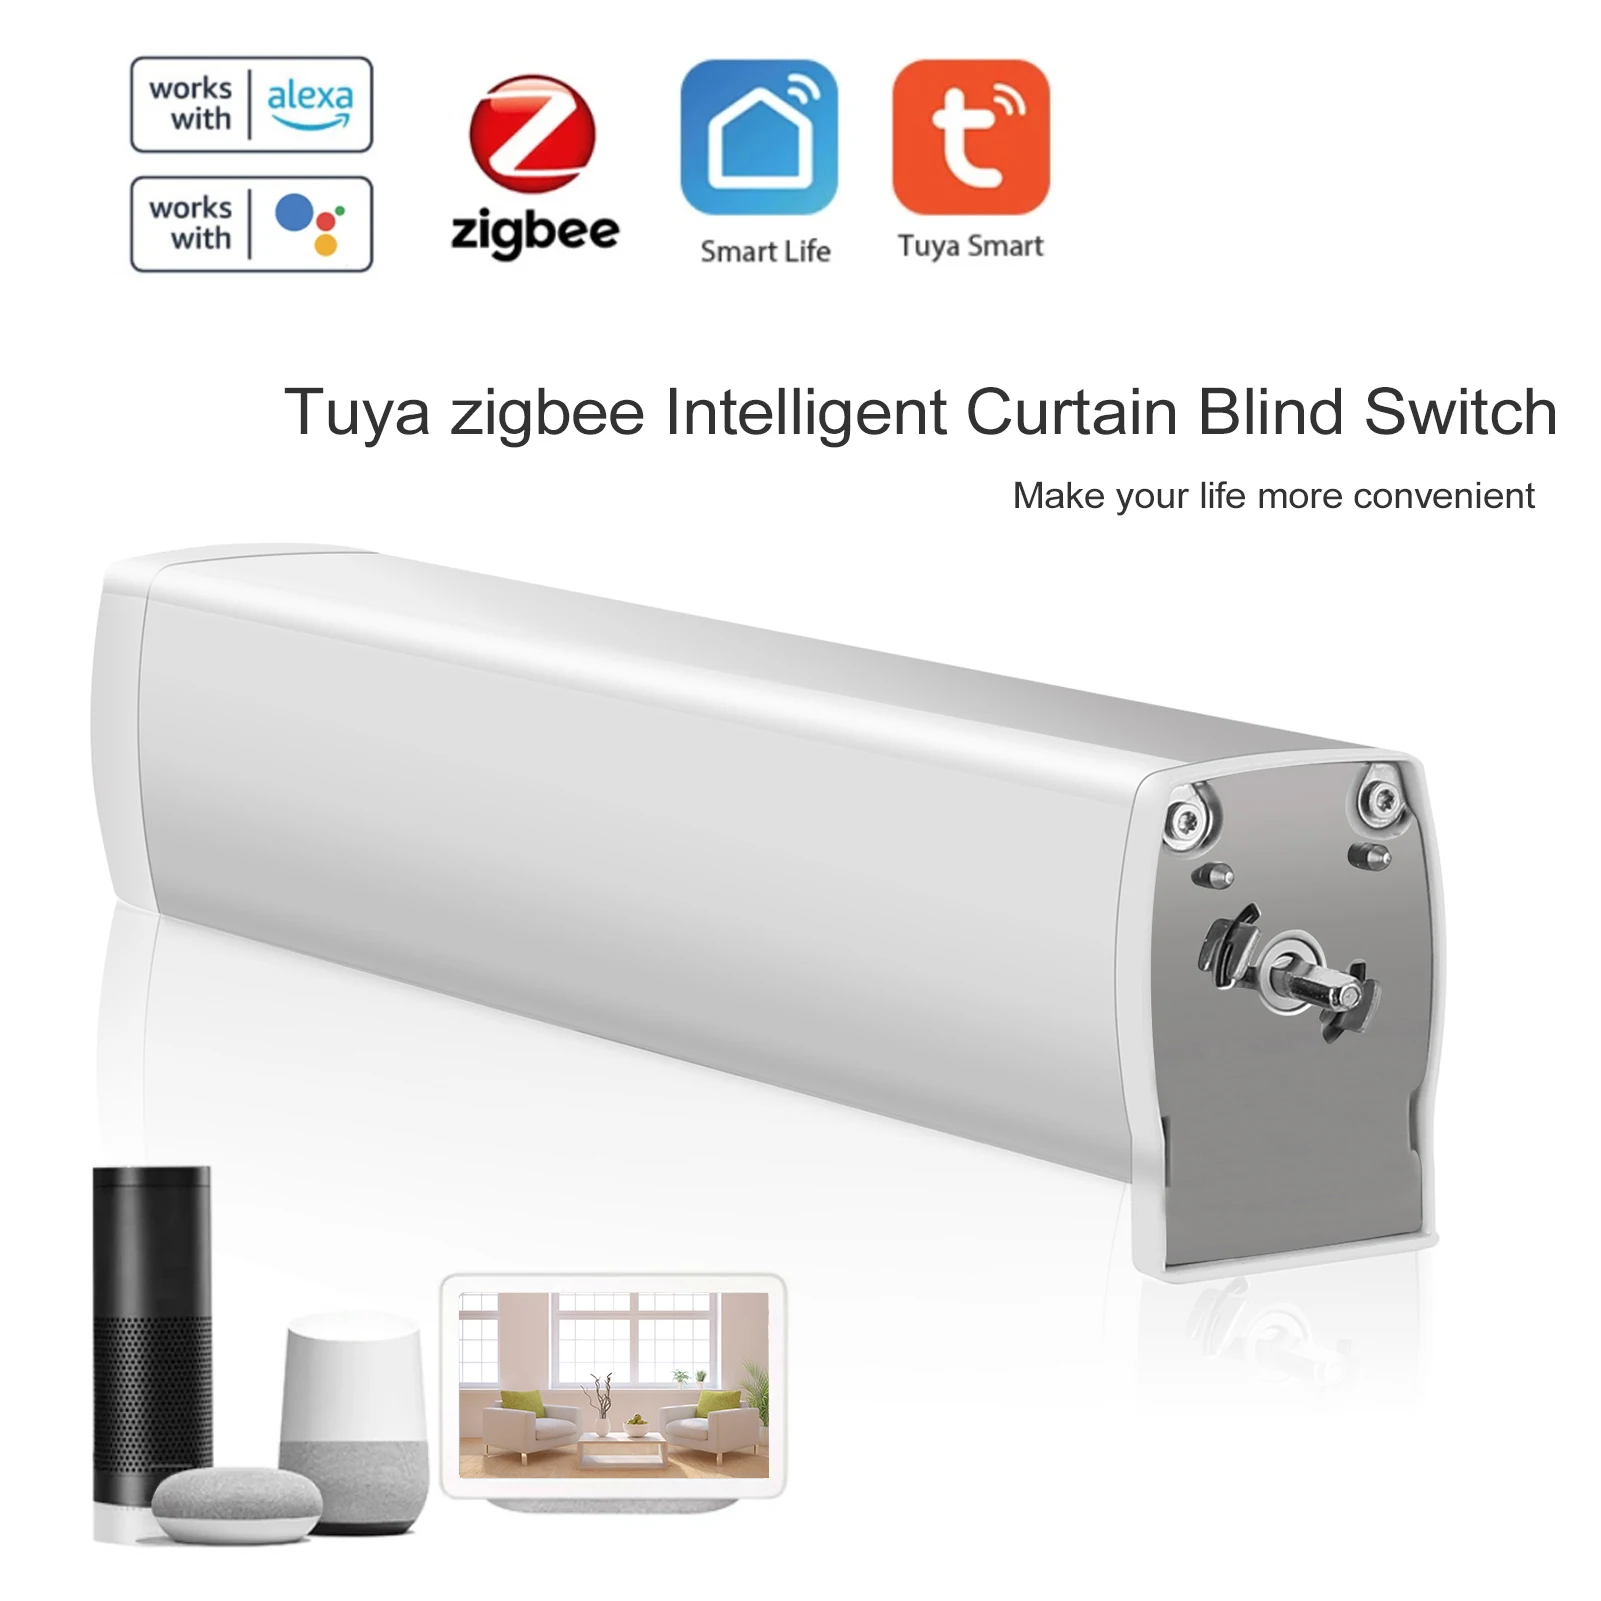 

Tuya ZigBee Intelligent Curtain Motor WIFI Ultra Quiet Electric Wireless Remote Control Voice Control Tool for Alexa Google Home